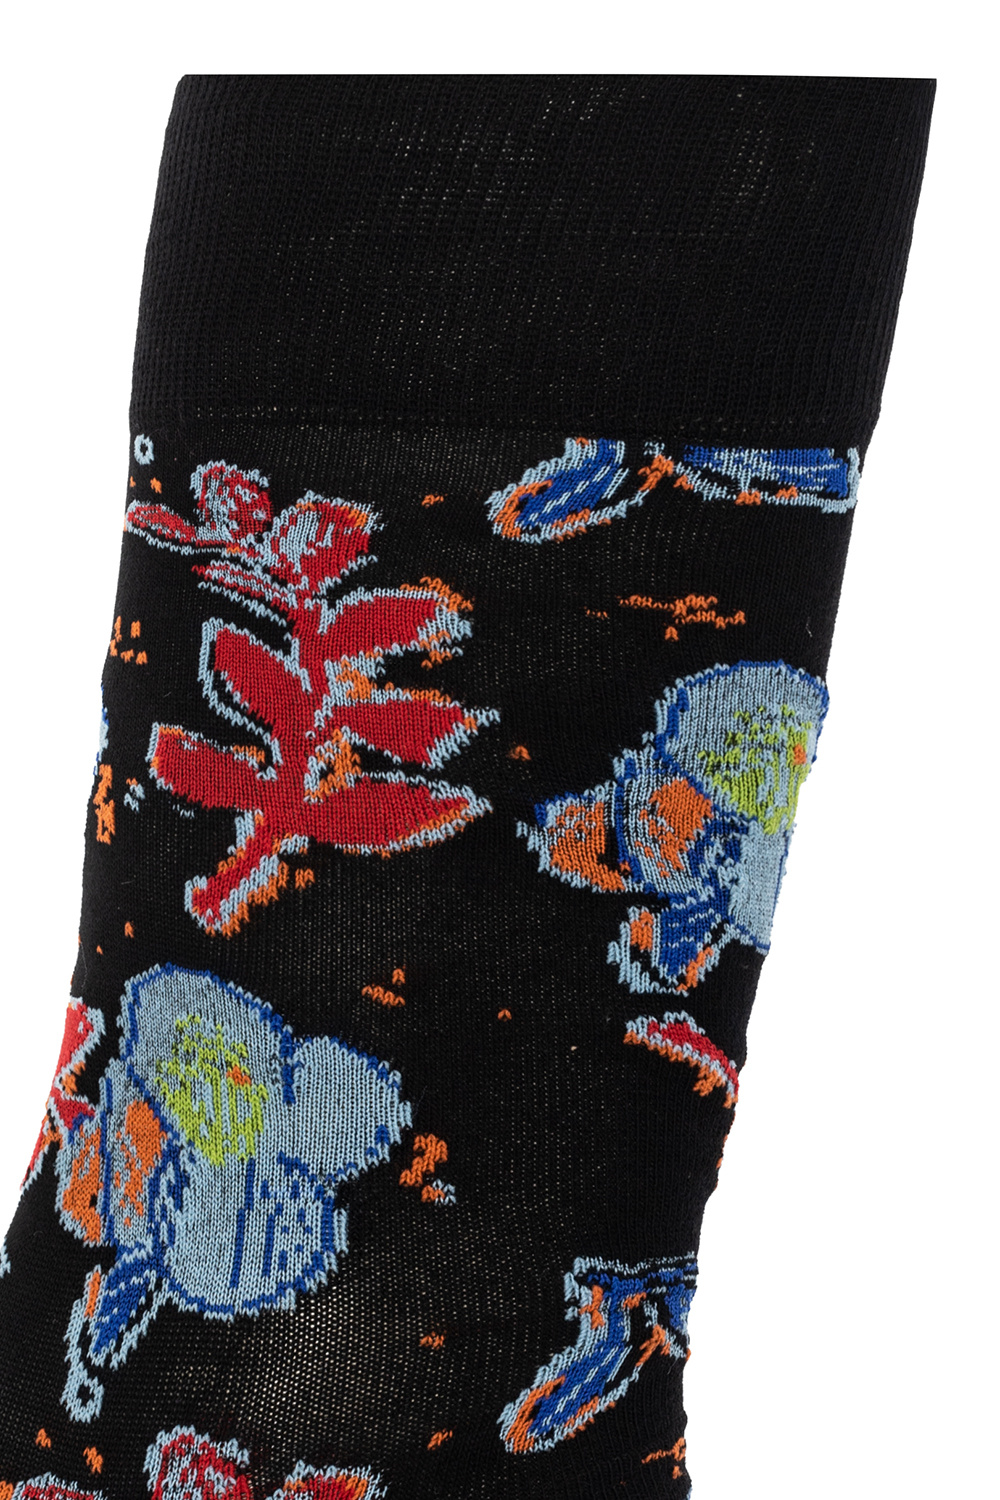 Paul Smith Patterned socks